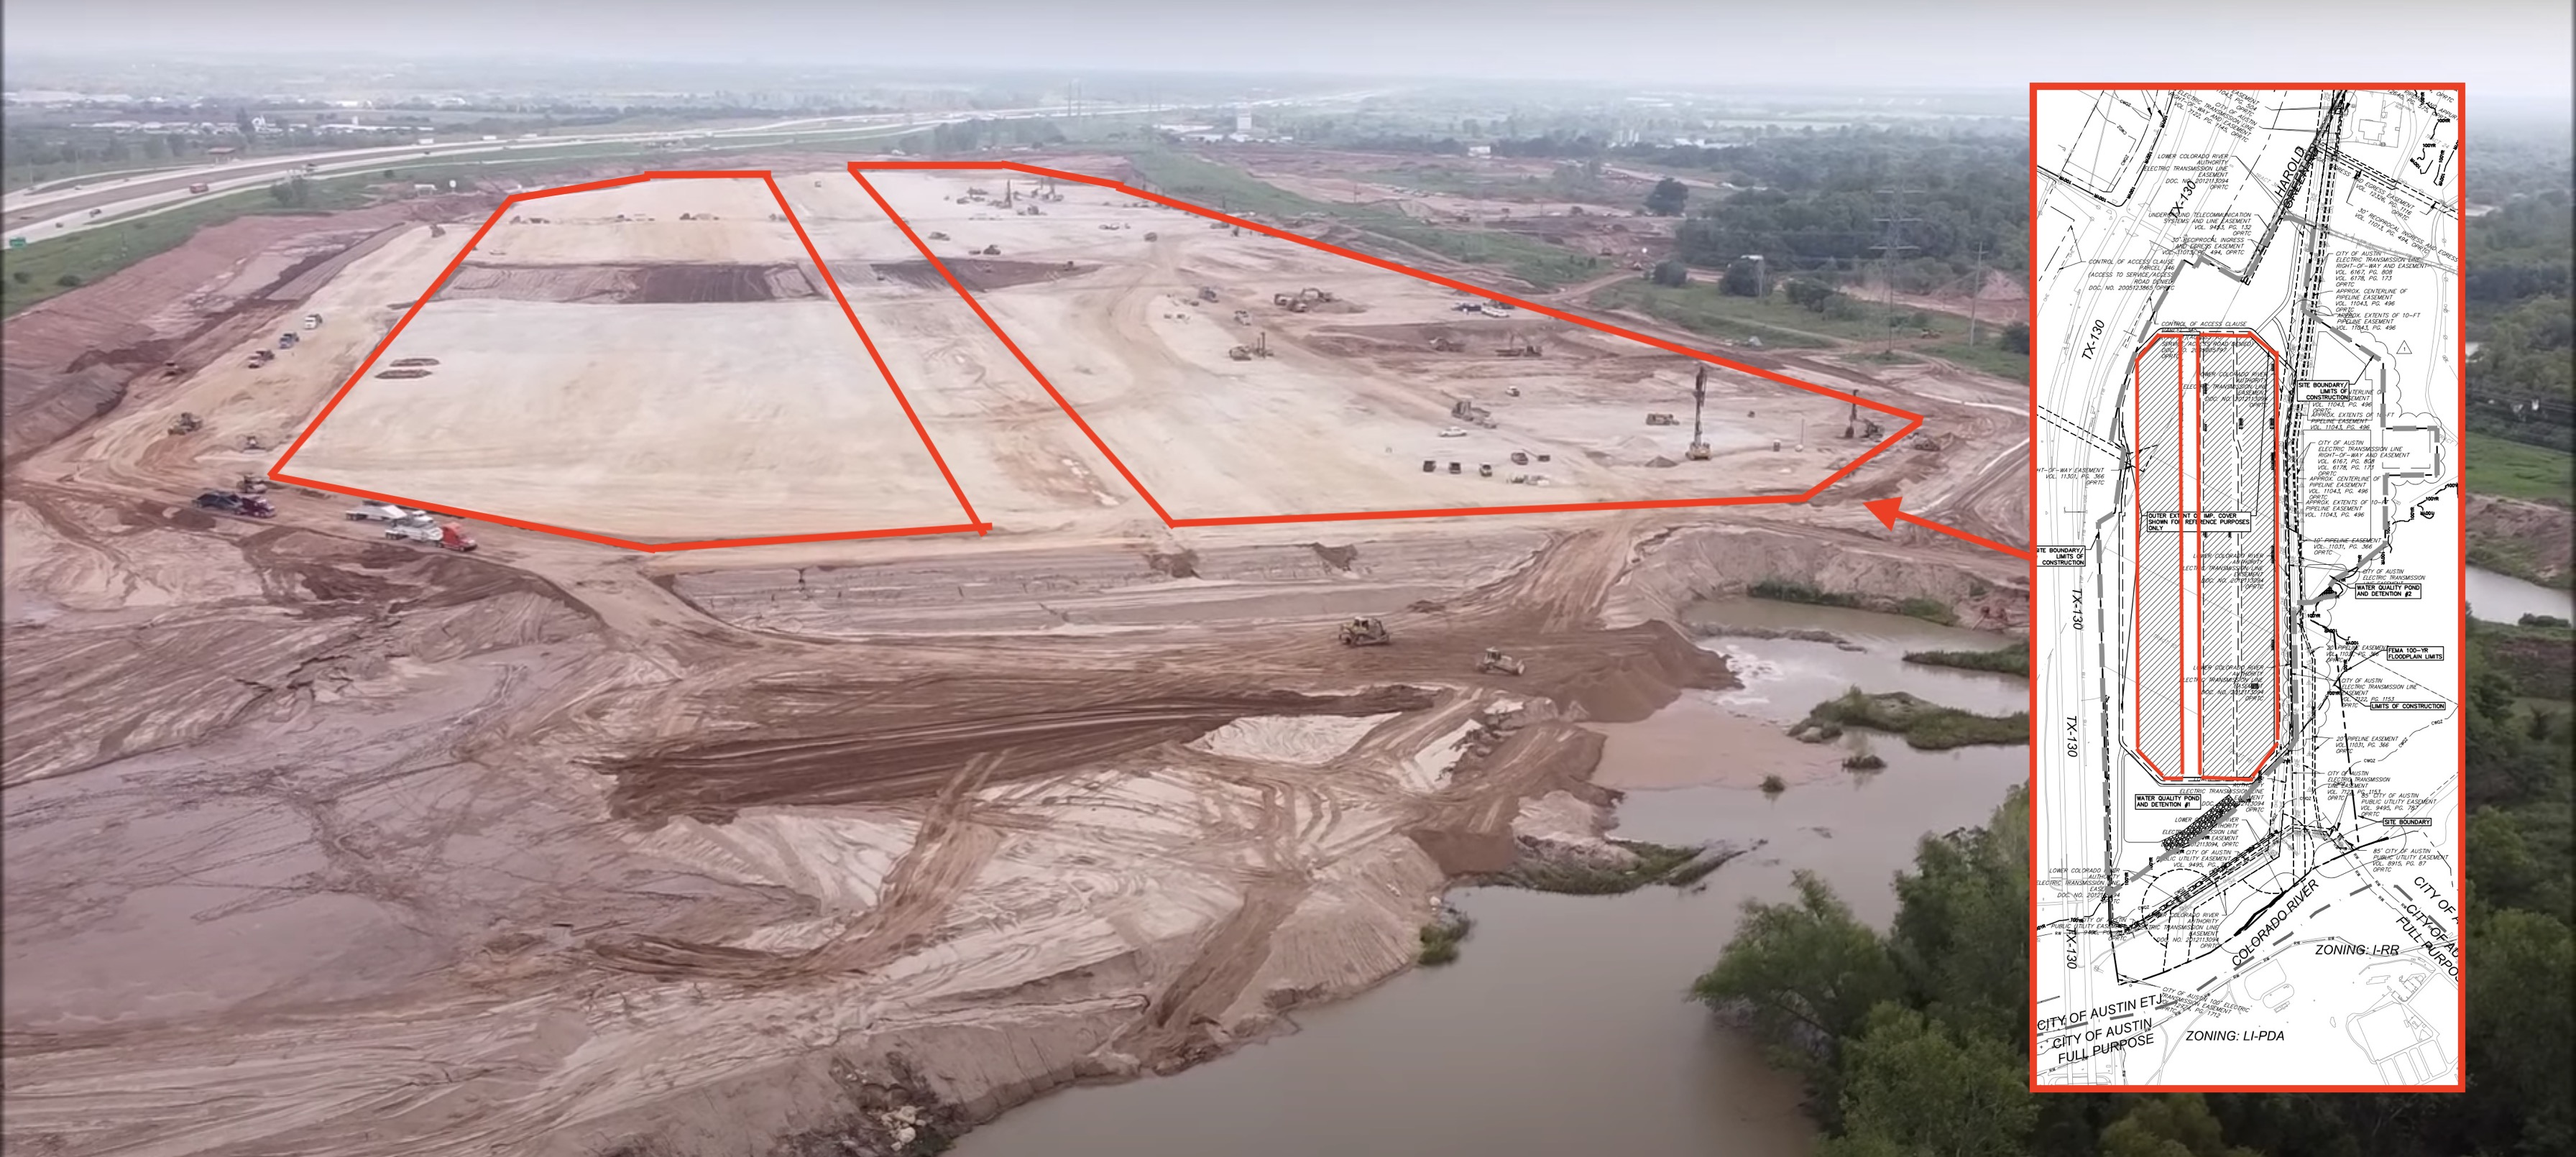 photo of Tesla Gigafactory Texas plans revealed, showing massive buildings with interesting shape image